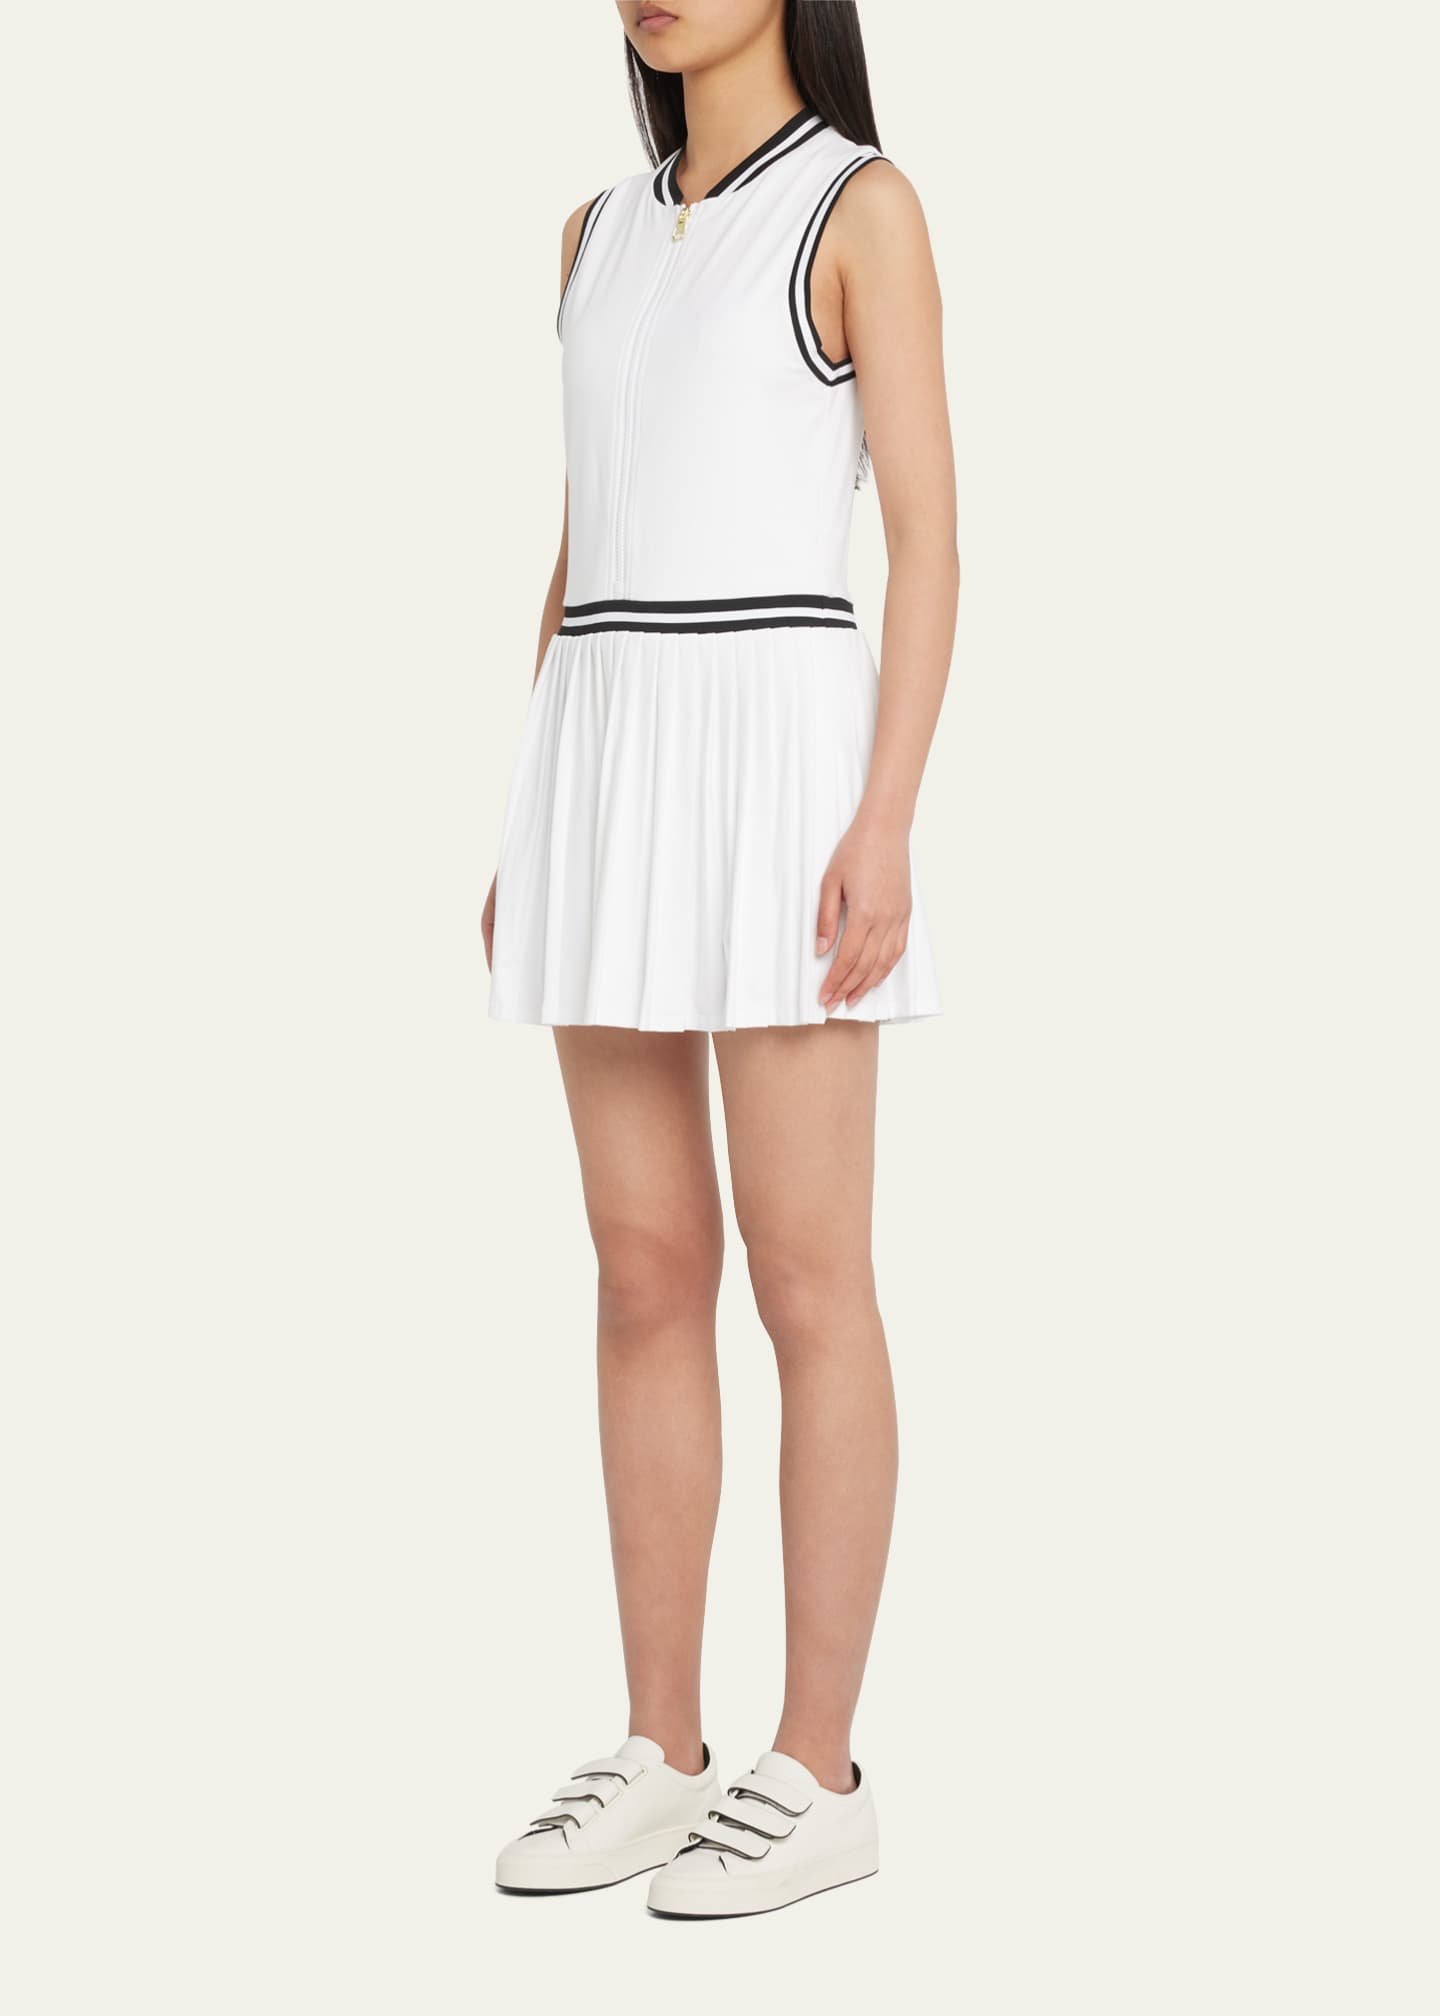 Varley Elgan Mini Tennis Dress - Bergdorf Goodman